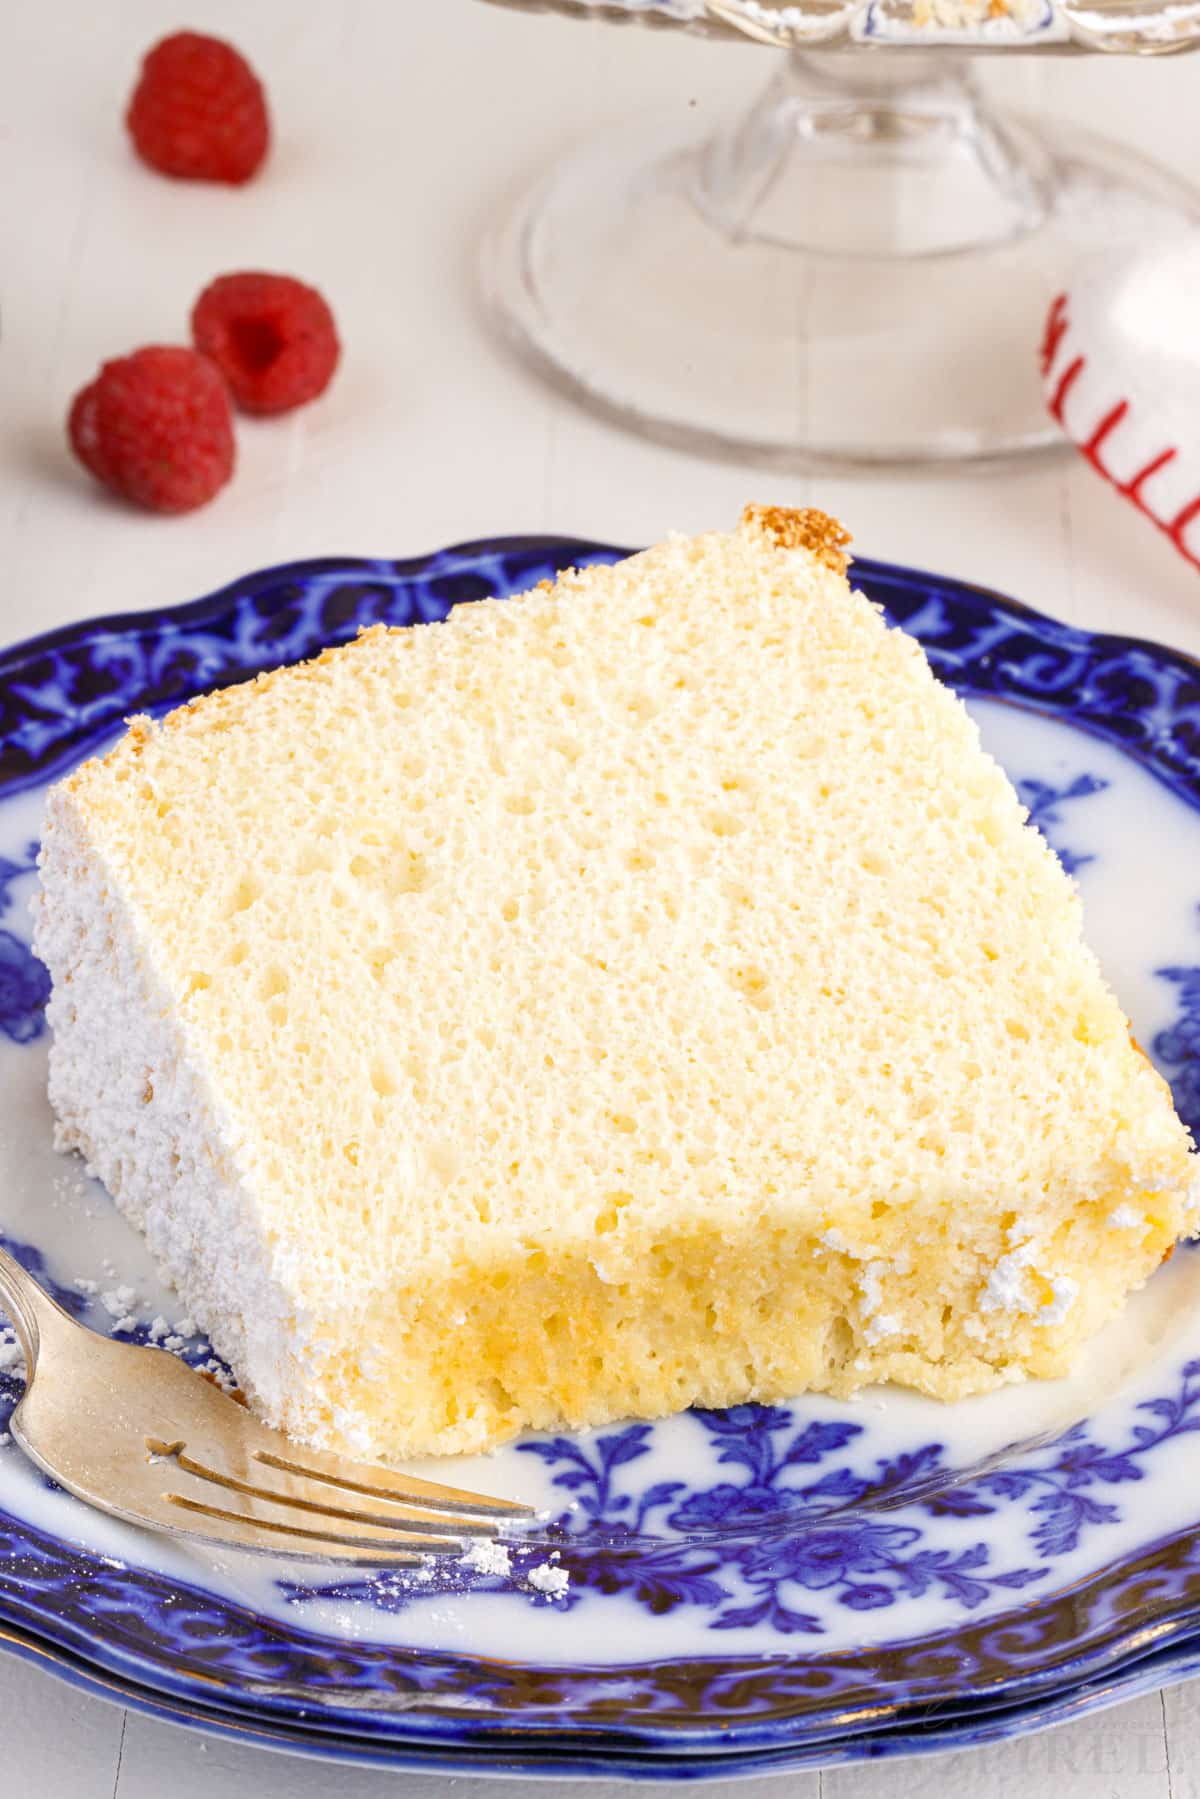 A plain slice of Vanilla Chiffon Cake on a decorative plate.